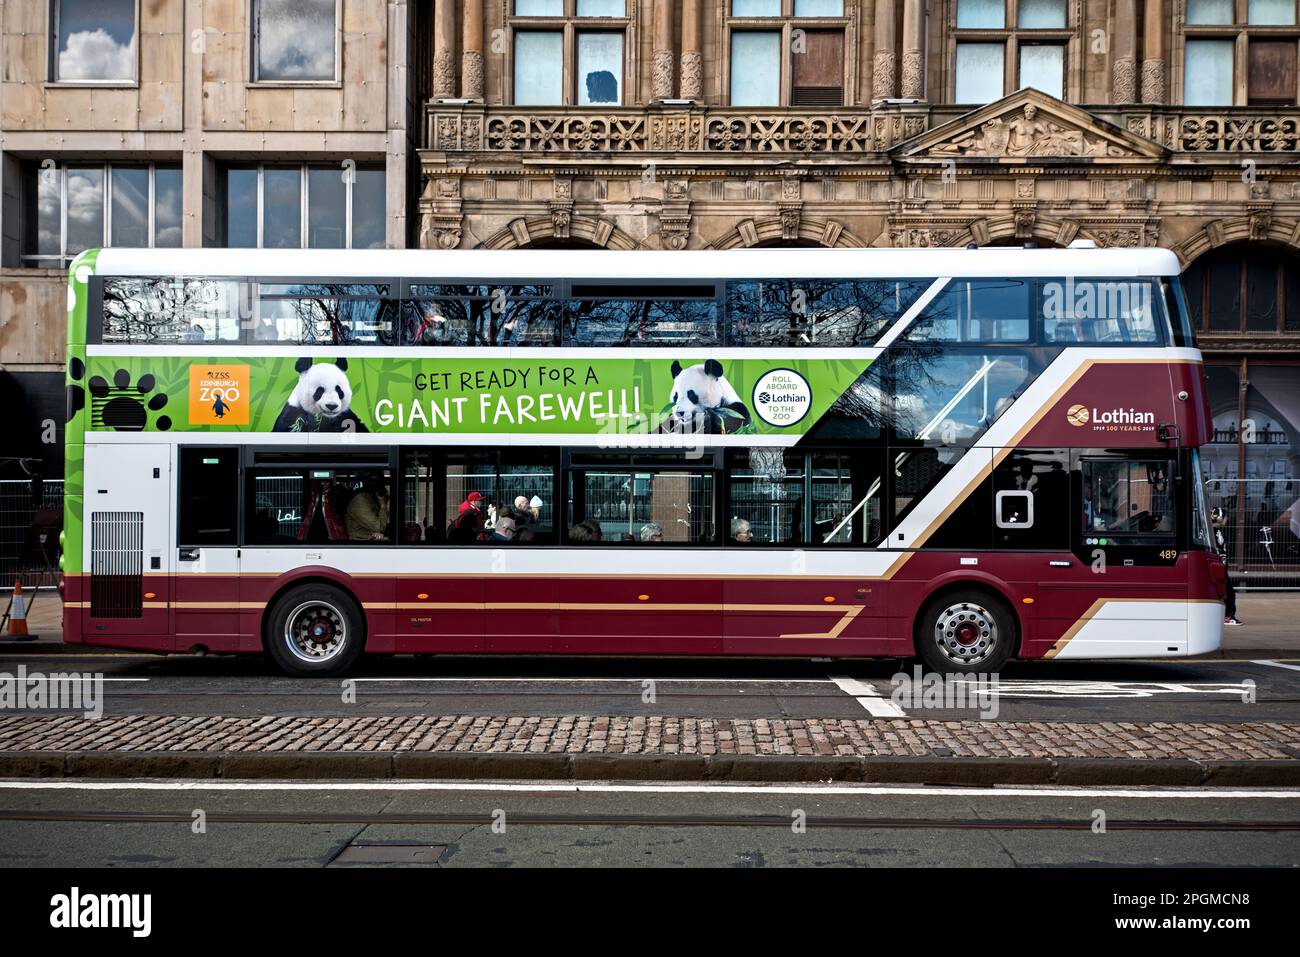 The Panda Bus, Edinburgh Zoo Advert - Get Ready for a Giant Farewell - con panda su un autobus Lothian su Princes Street, Edimburgo, Scozia, Regno Unito. Foto Stock